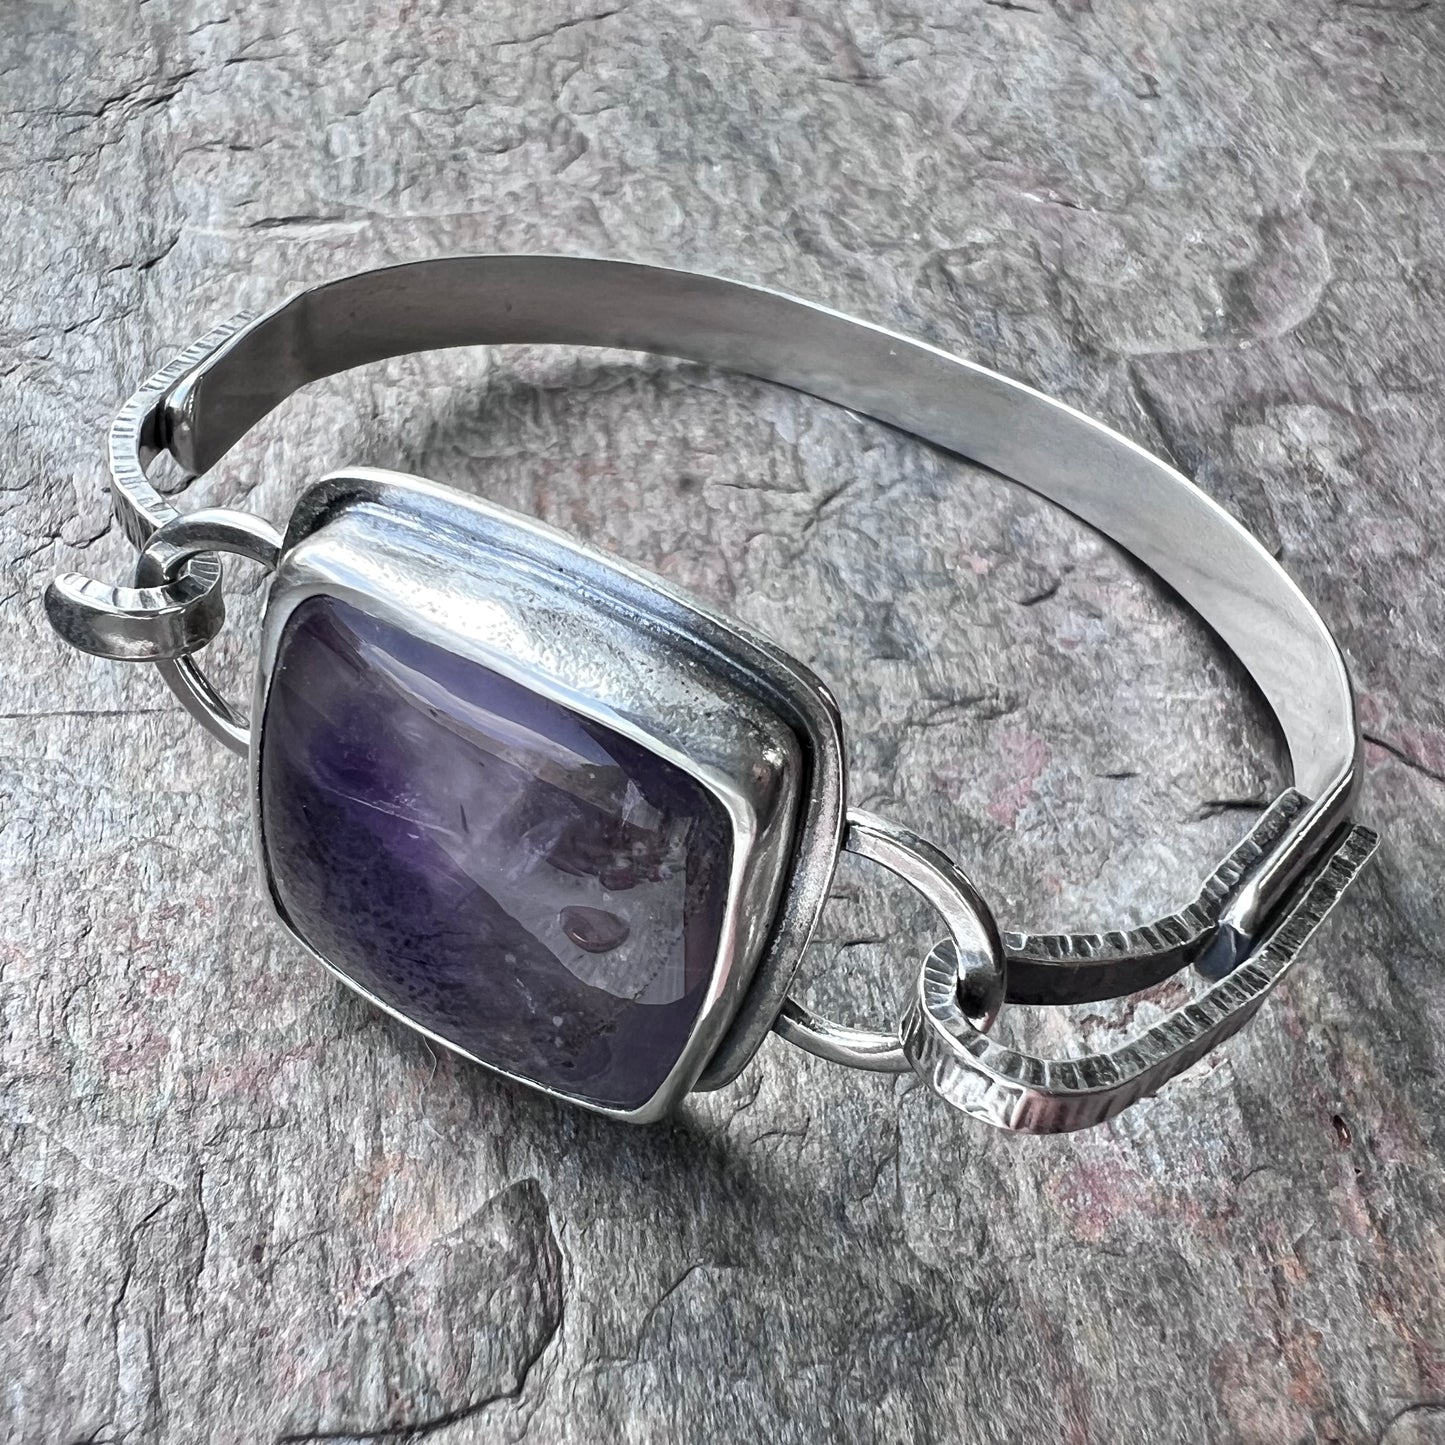 Amethyst Sterling Silver Bracelet - Handmade One-of-a-kind Tension Cuff Bracelet